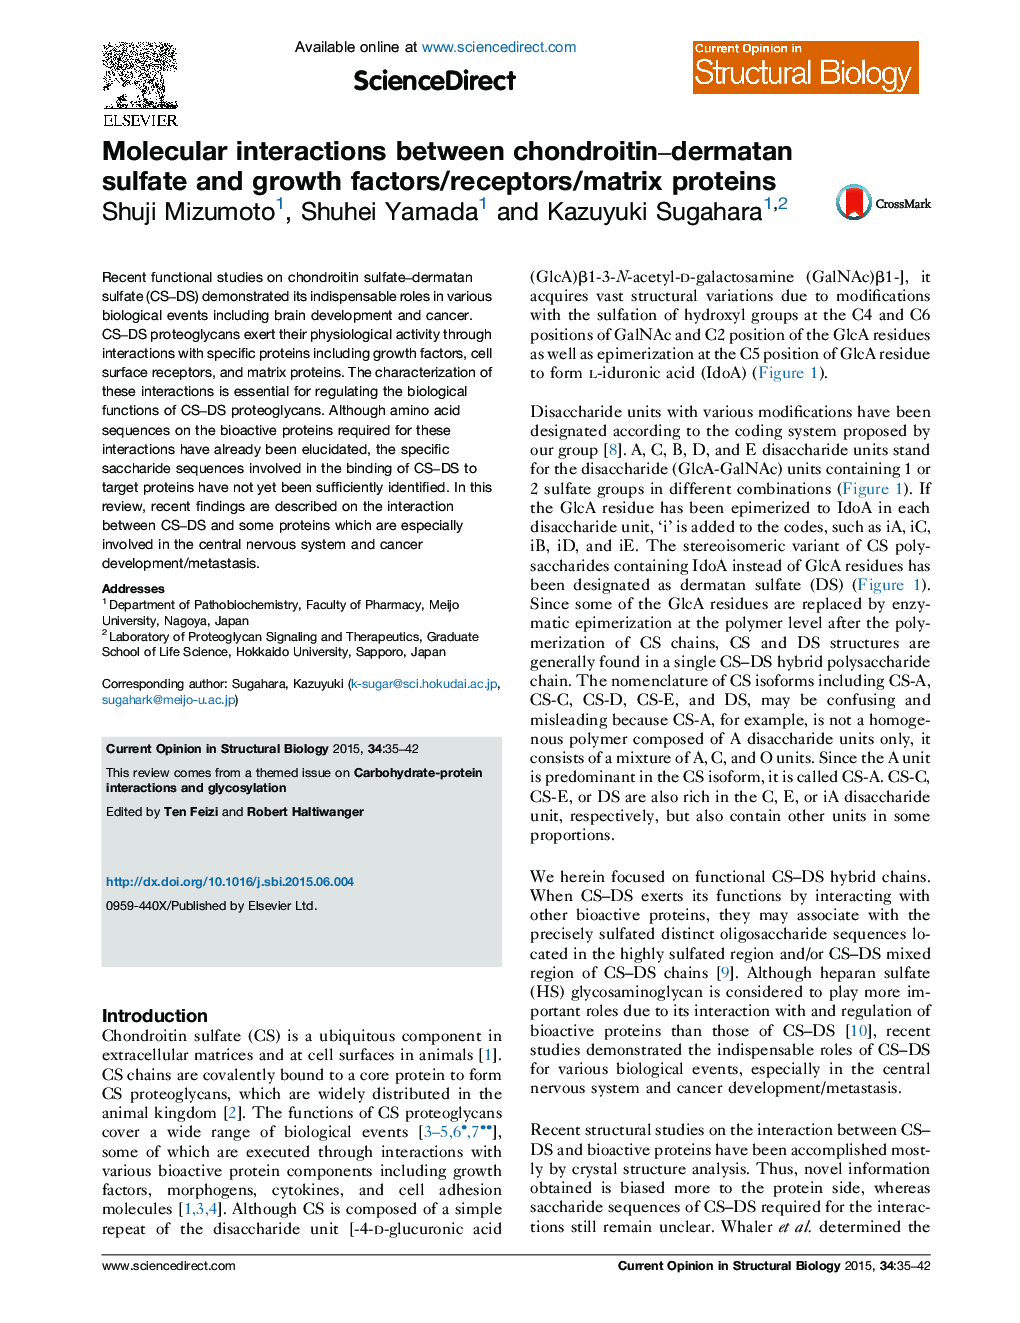 Molecular interactions between chondroitin-dermatan sulfate and growth factors/receptors/matrix proteins